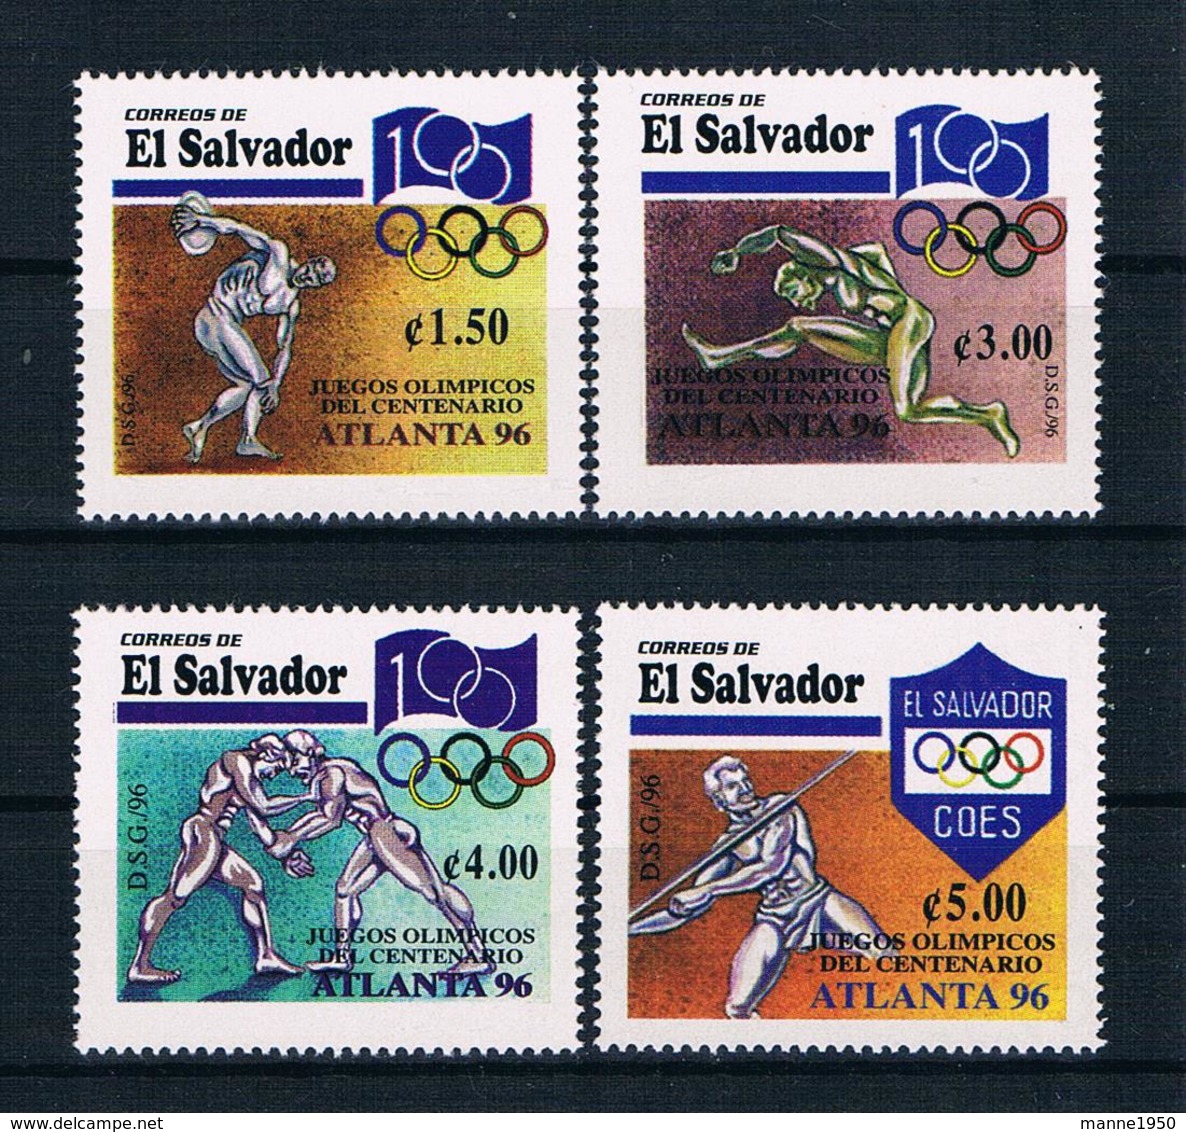 El Salvador 1996 Olympia Mi.Nr. 2024/27 Kpl. Satz ** - El Salvador